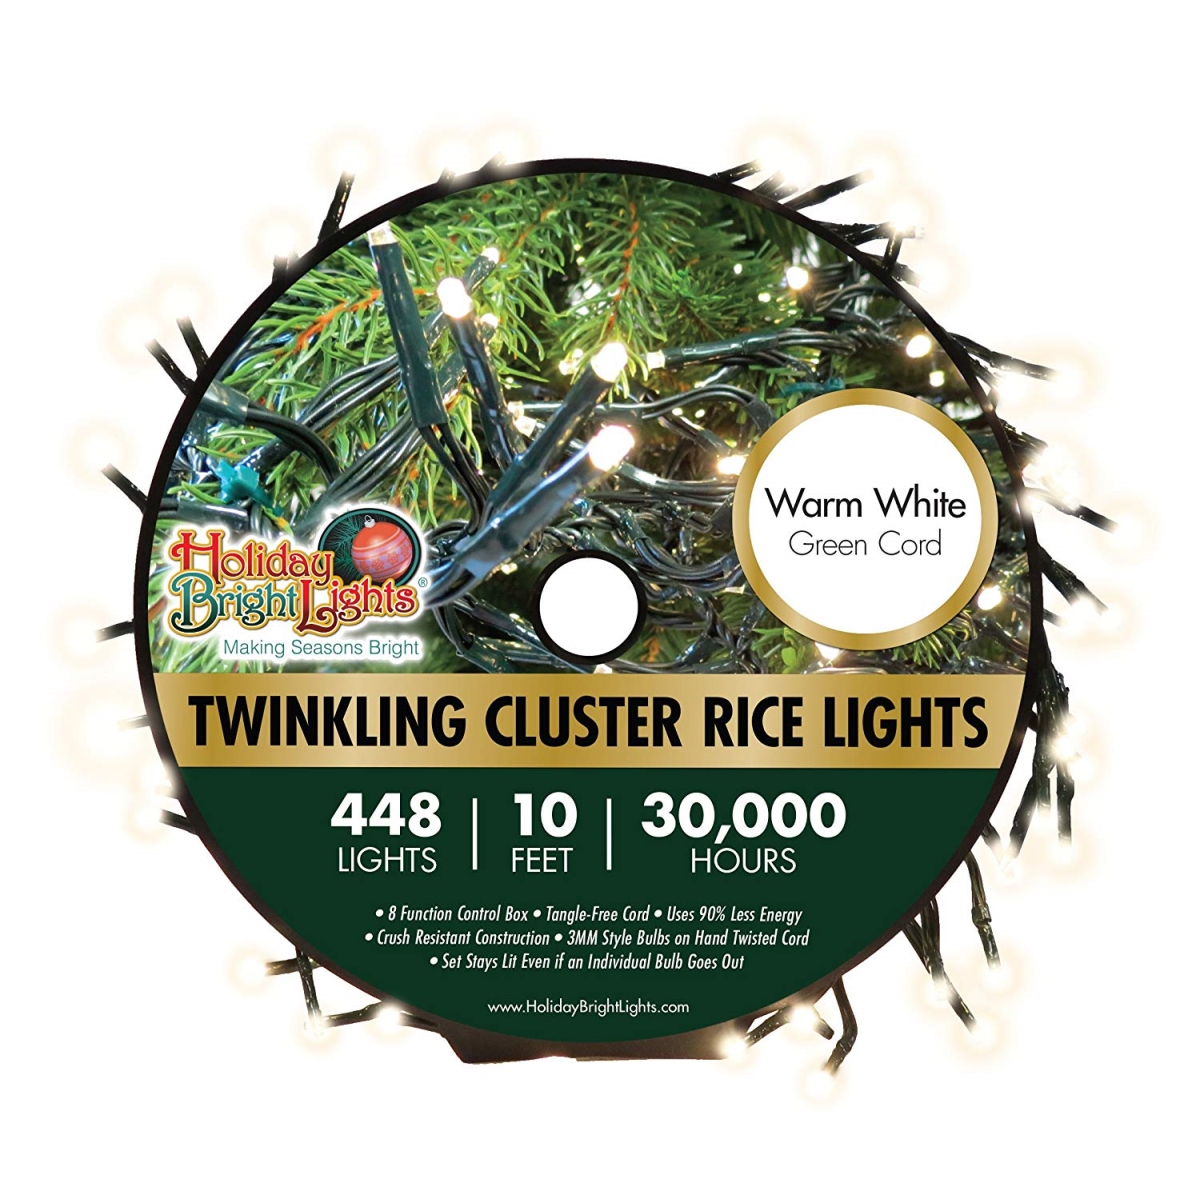 Nu Tsai Capital Dba 7712375 10 Ft. Cluster Rice Christmas Light Reel - Warm White, 448 Lights